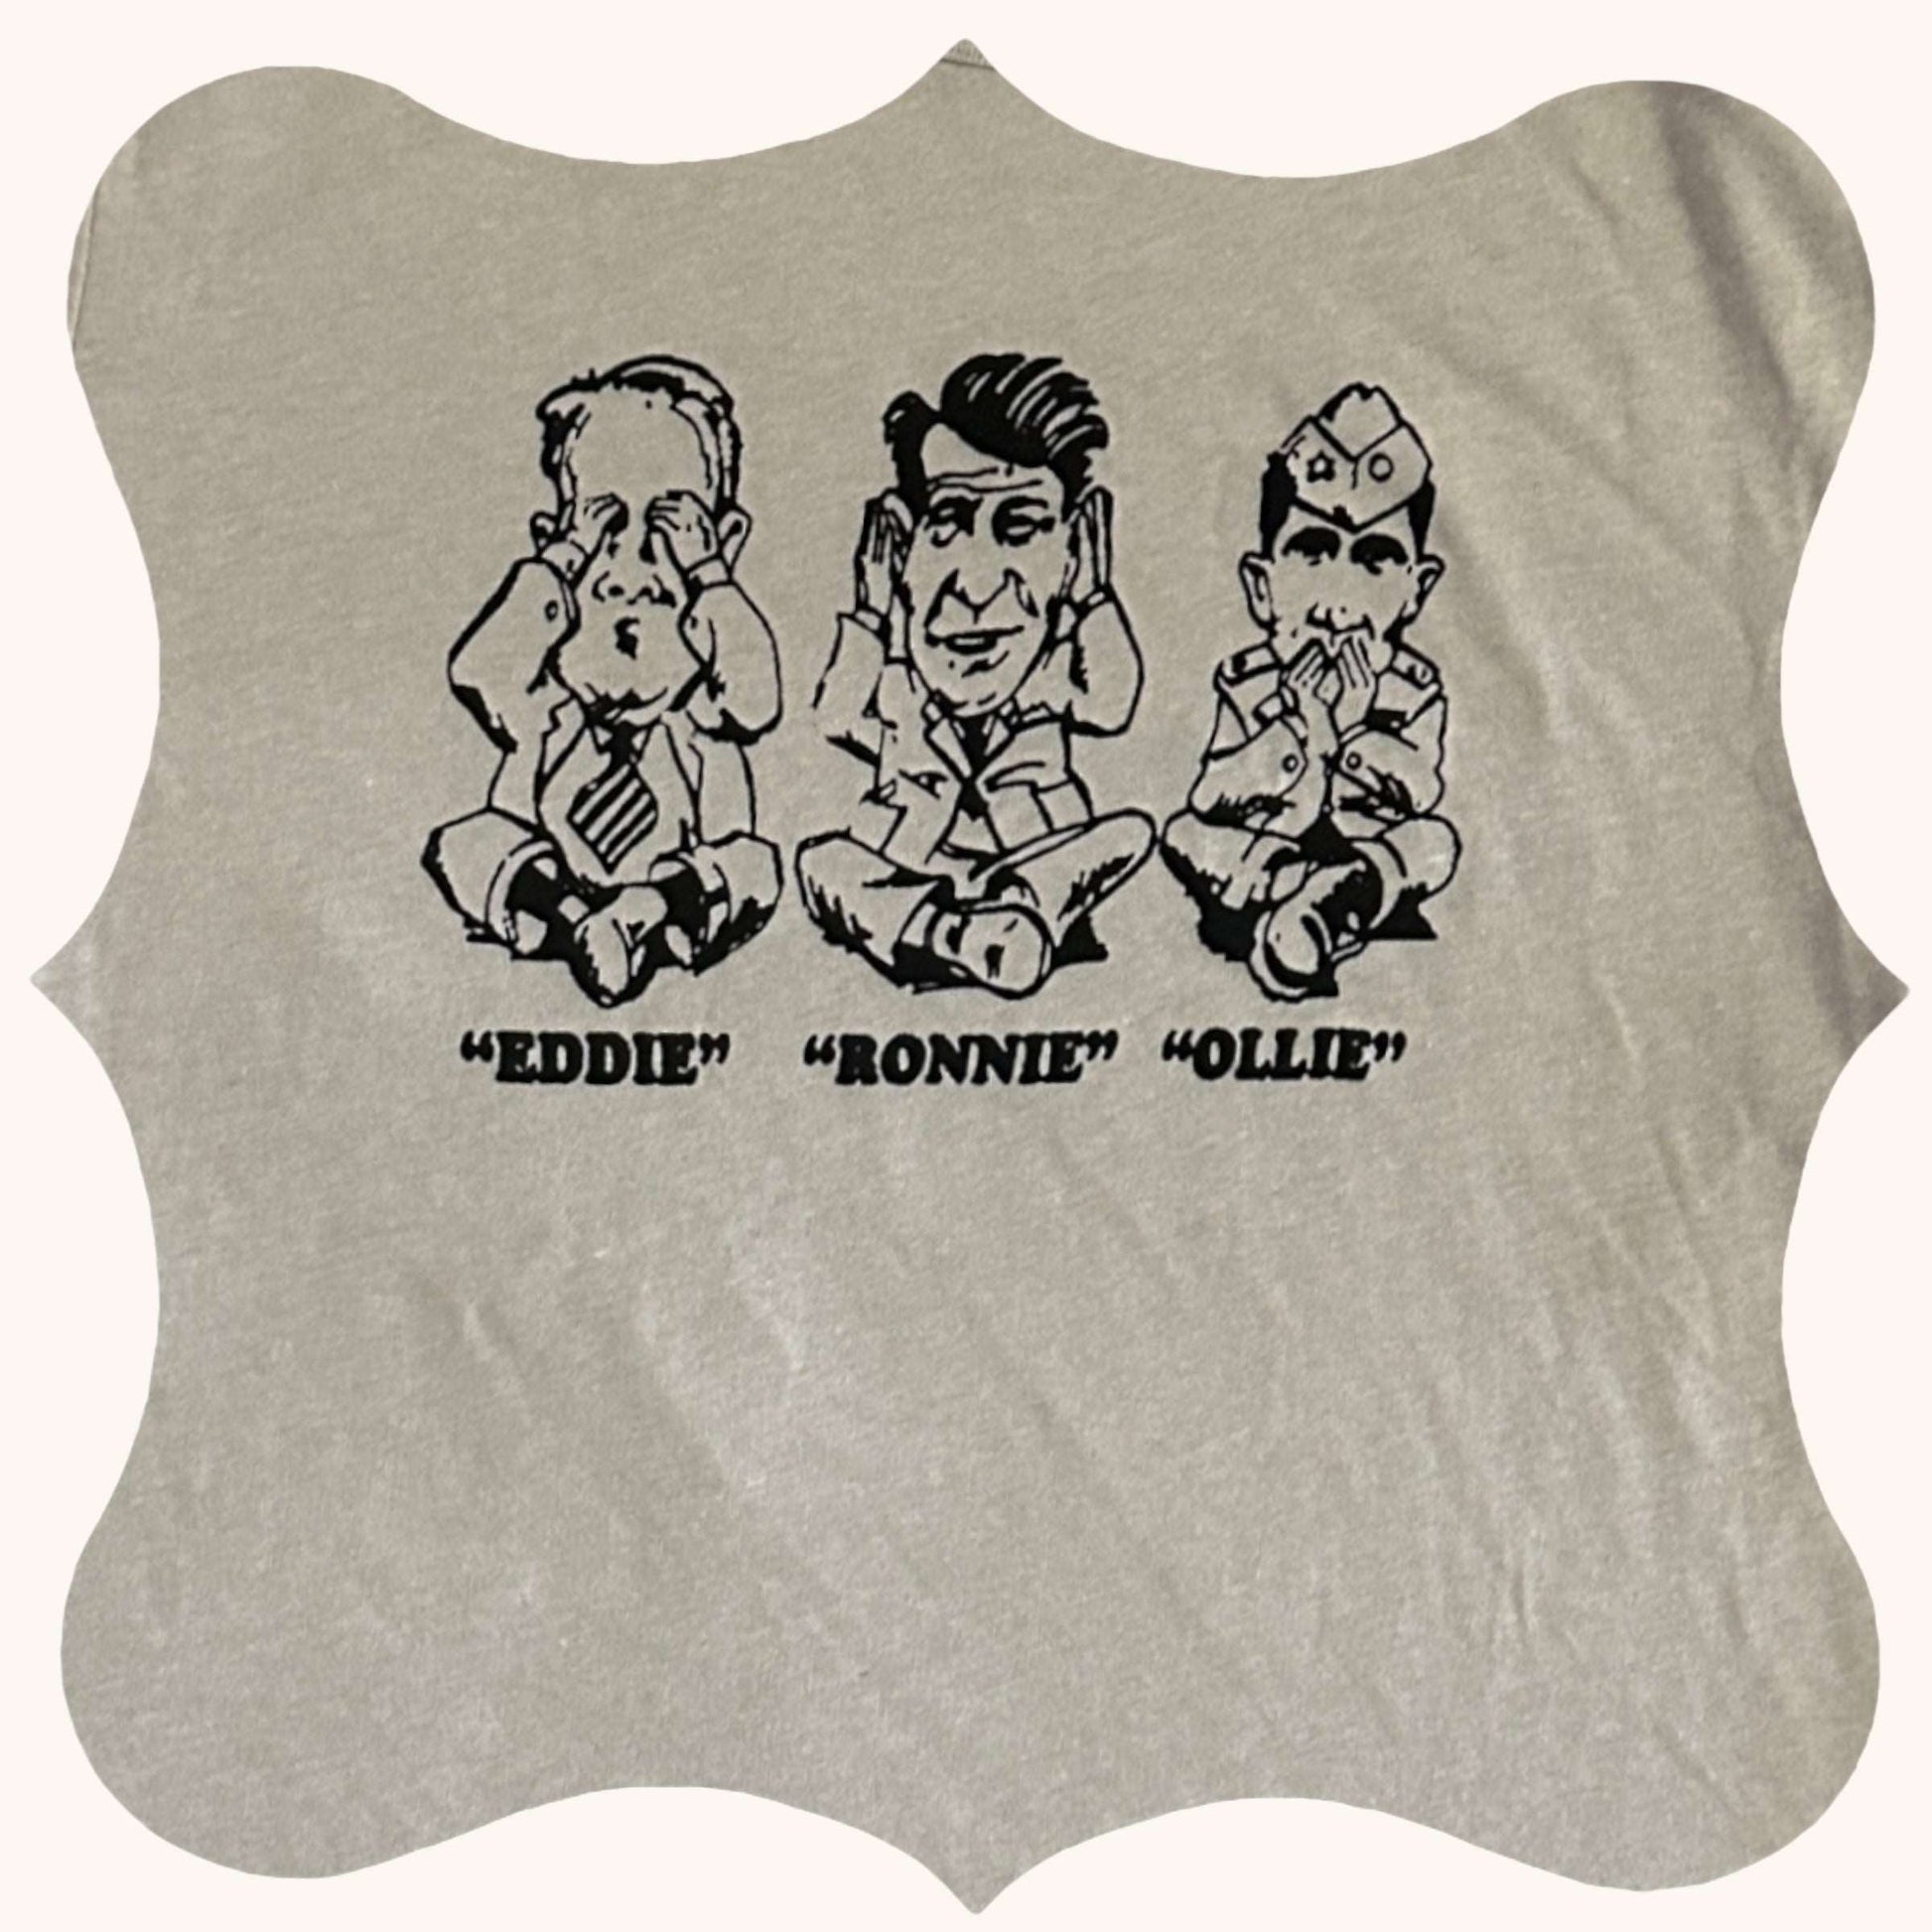 See No Evil Iran-Contra Affair Vintage Reproduction T-shirt